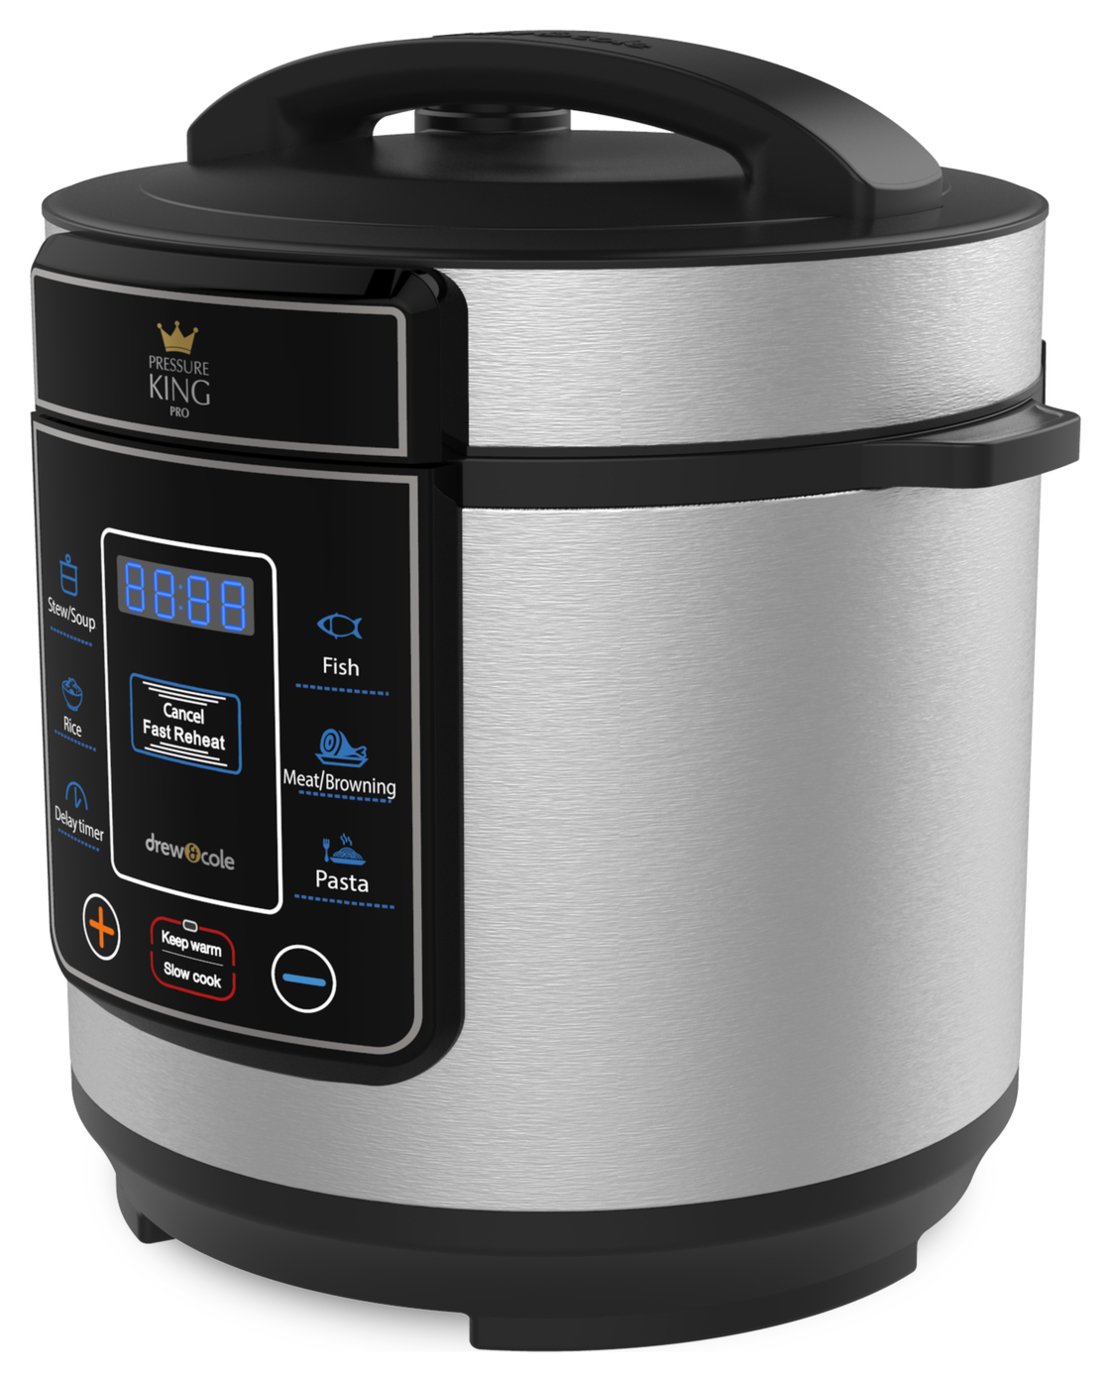 Pressure King Pro 8-in-1 3L Digital Pressure Cooker Review